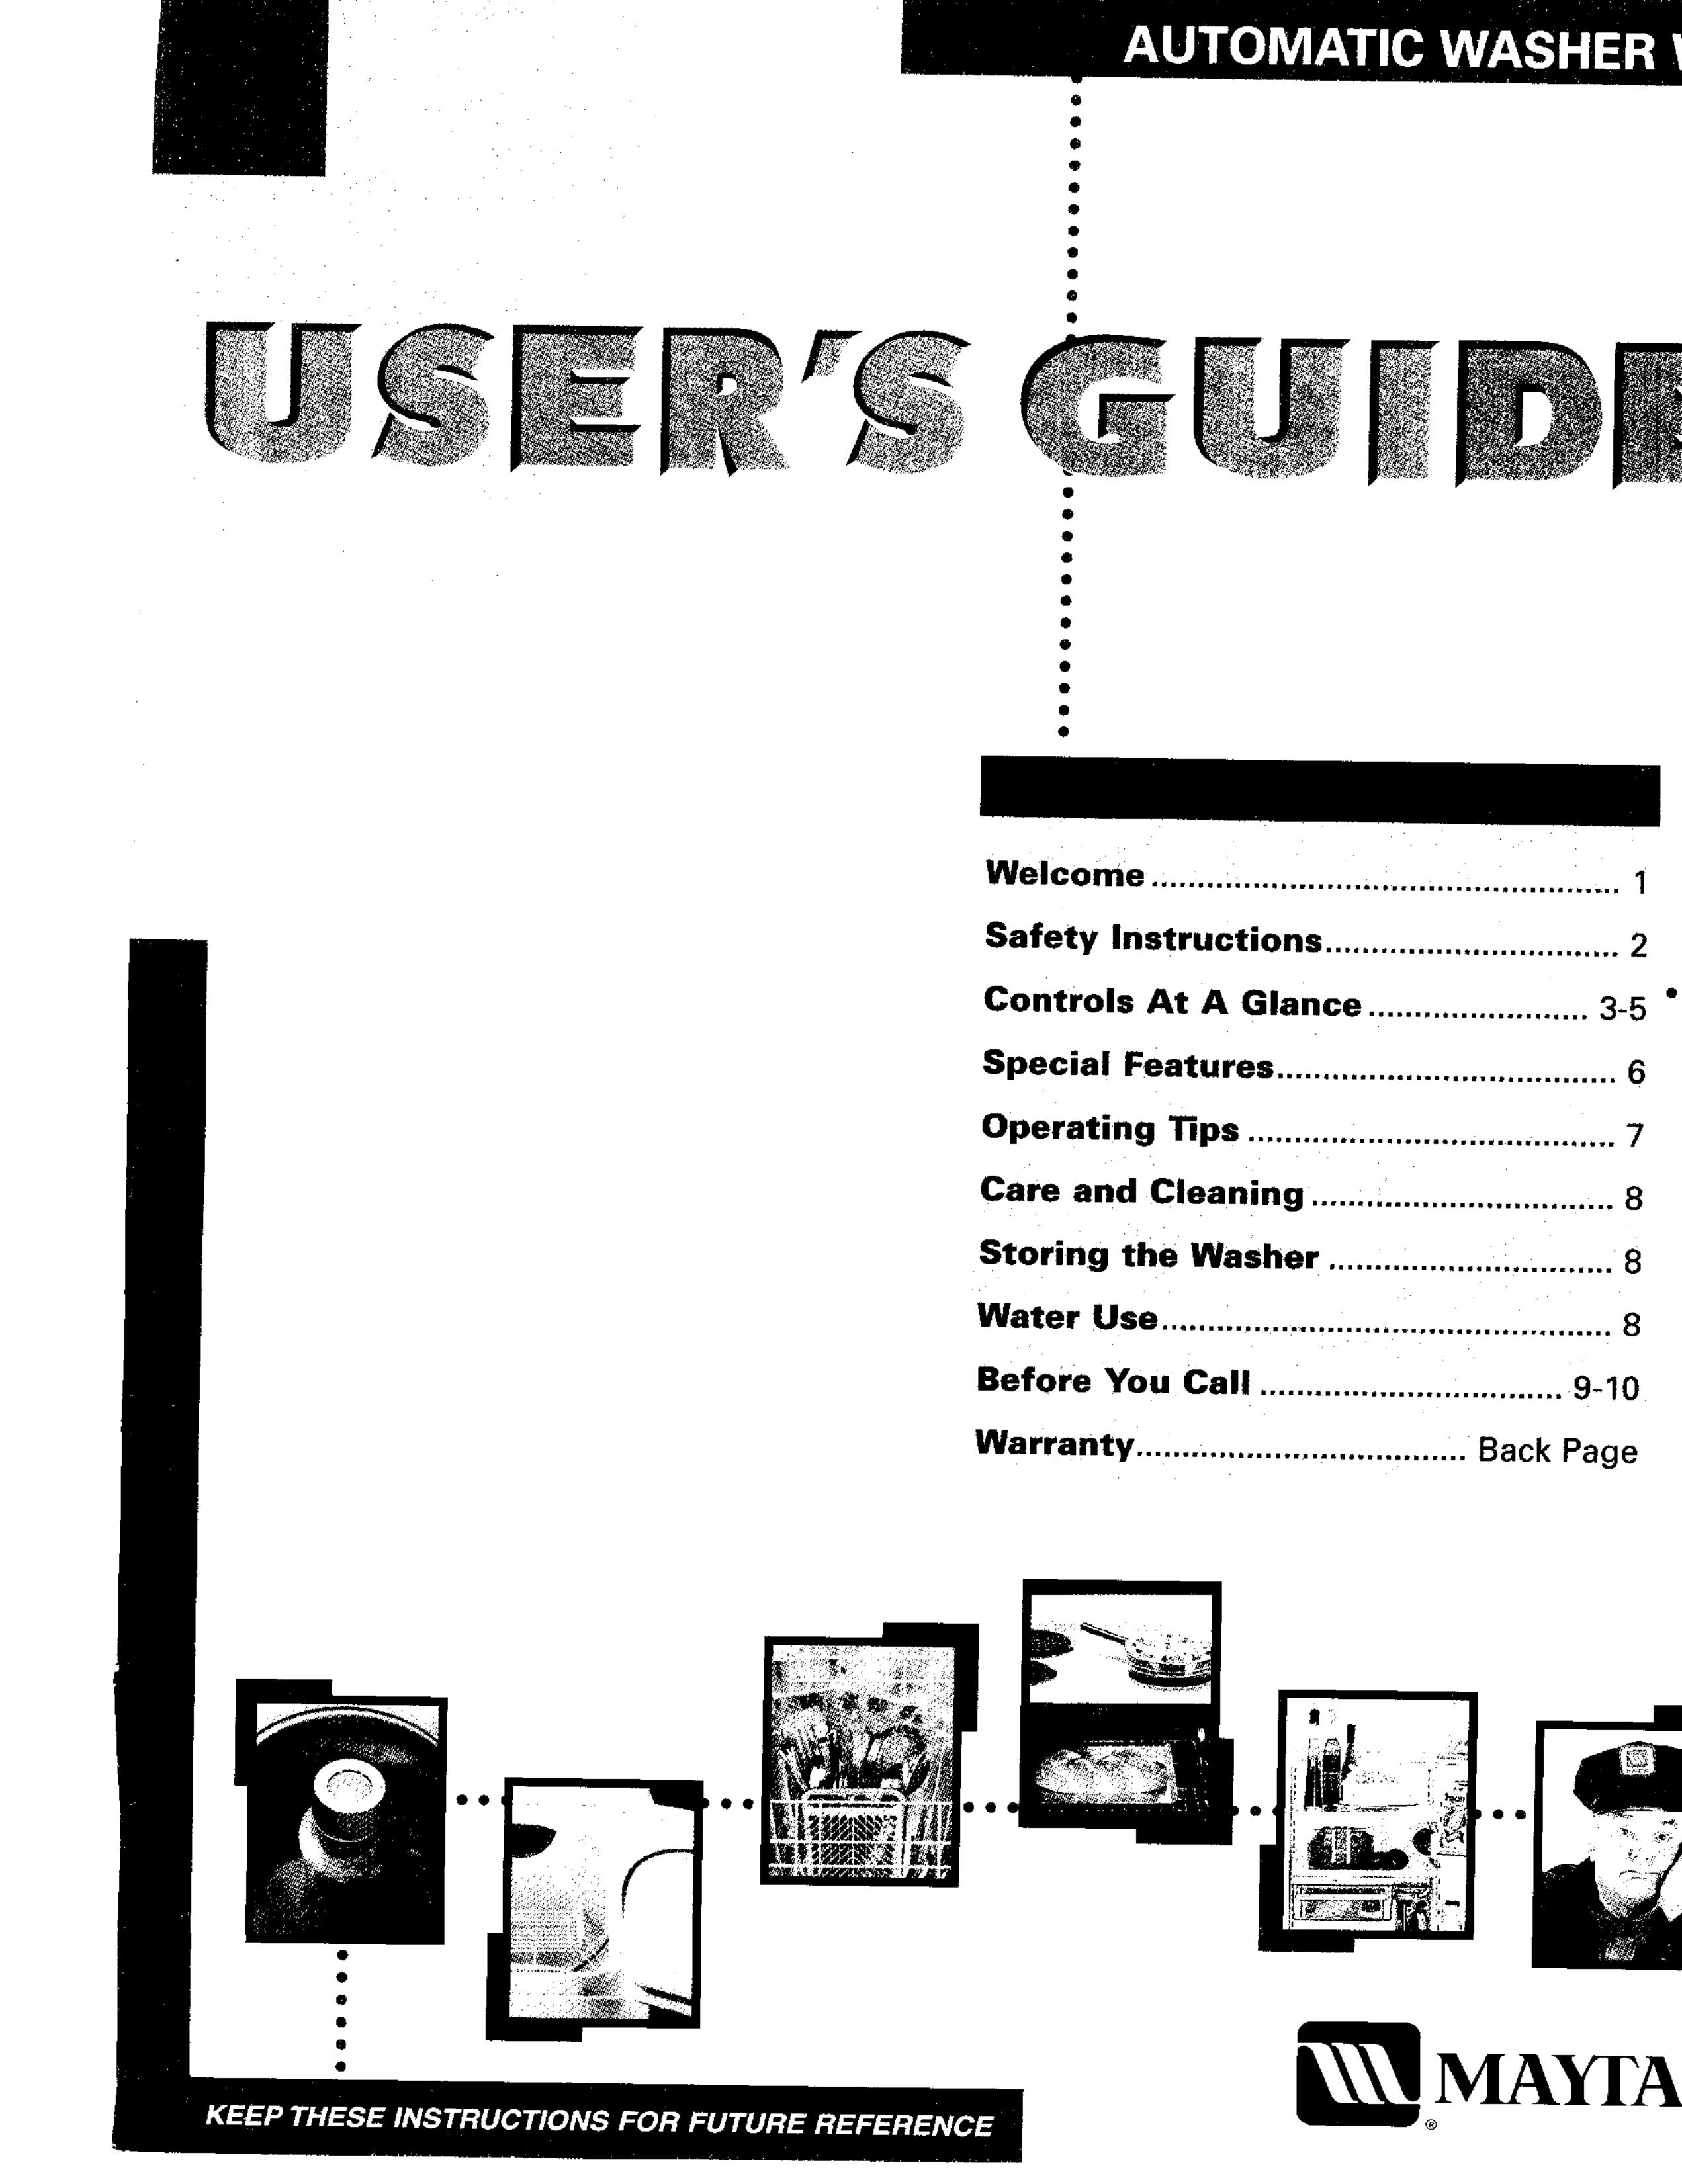 Maytag LAT8816 Washer User Manual